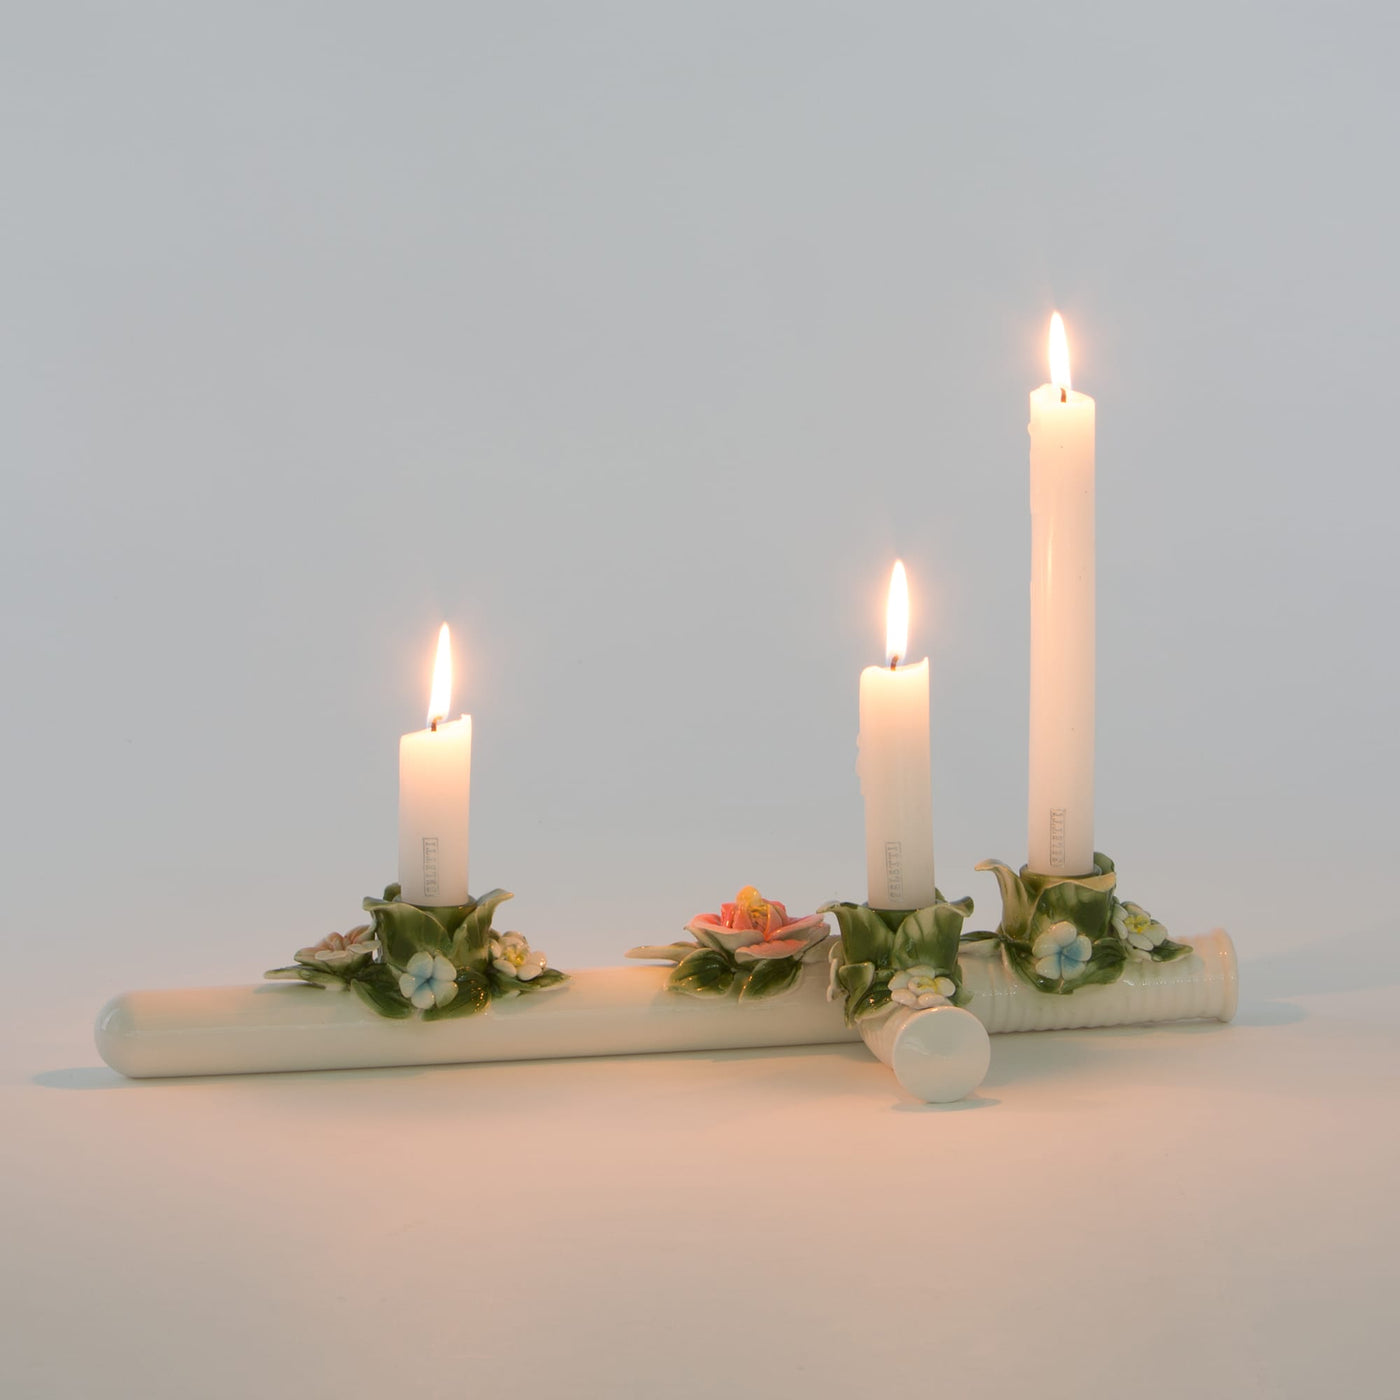 The Spontoon Ceramic Flower Candle Holder